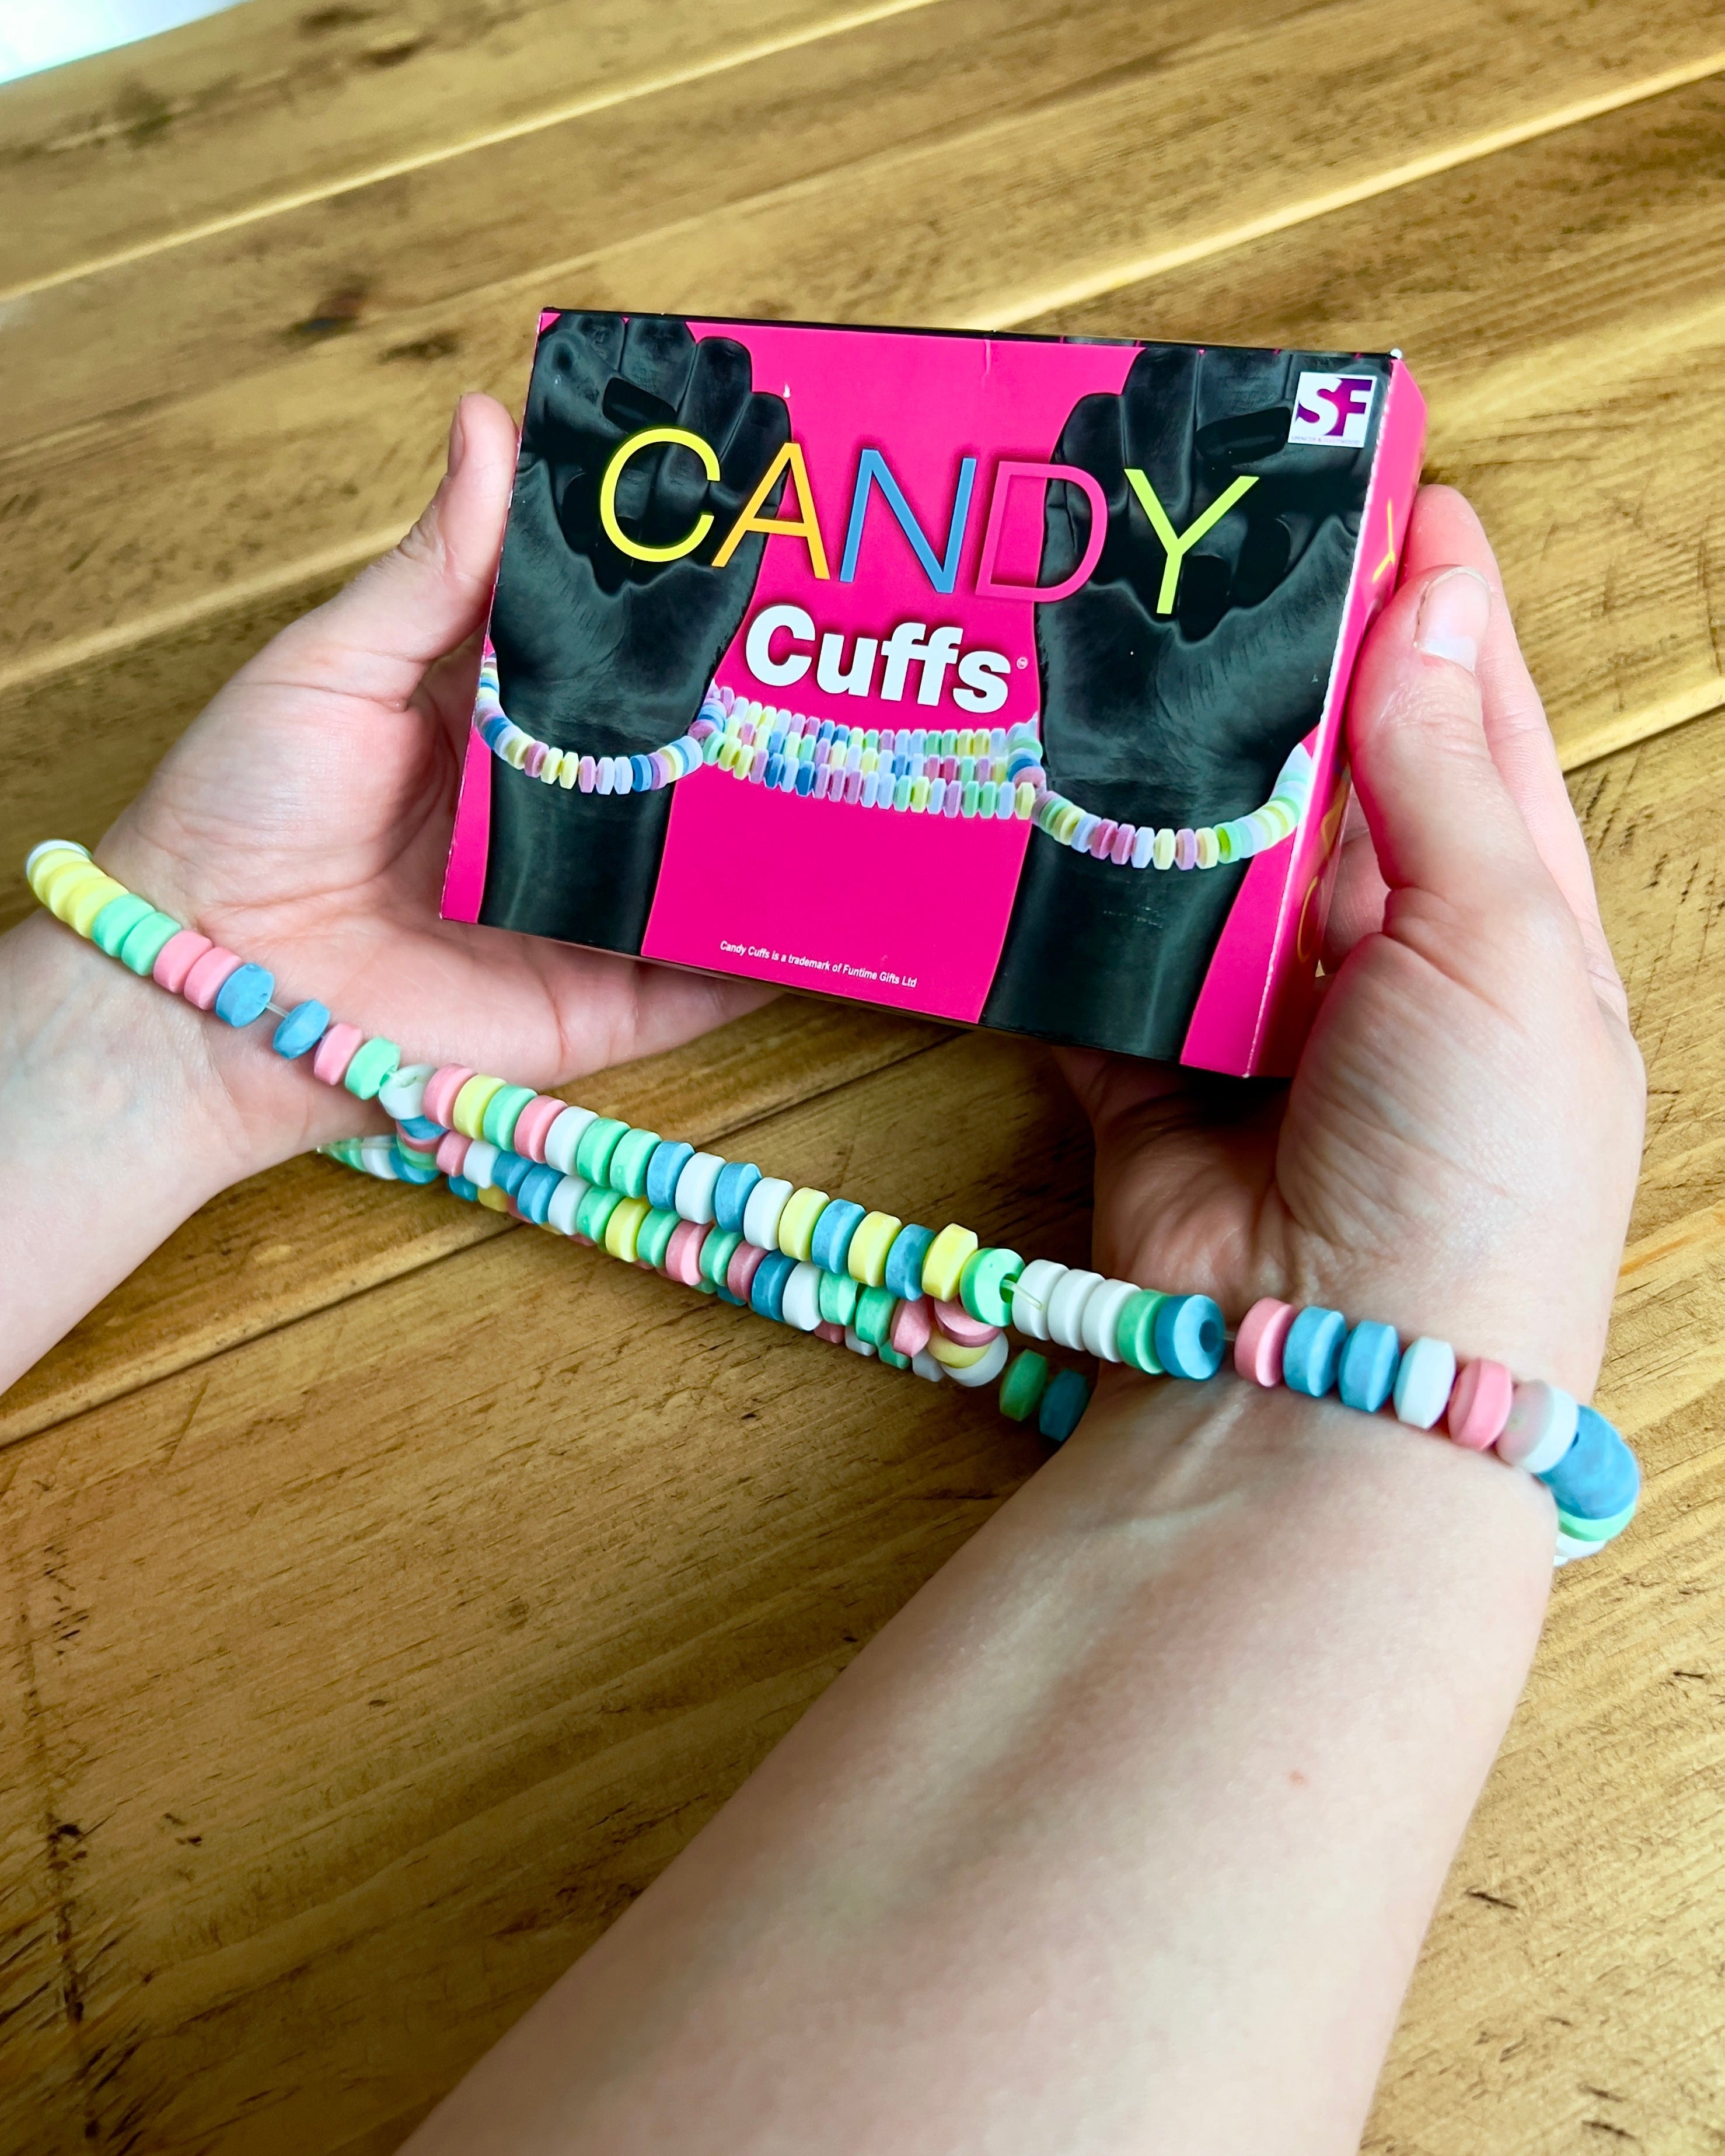 Candy Cuffs in use